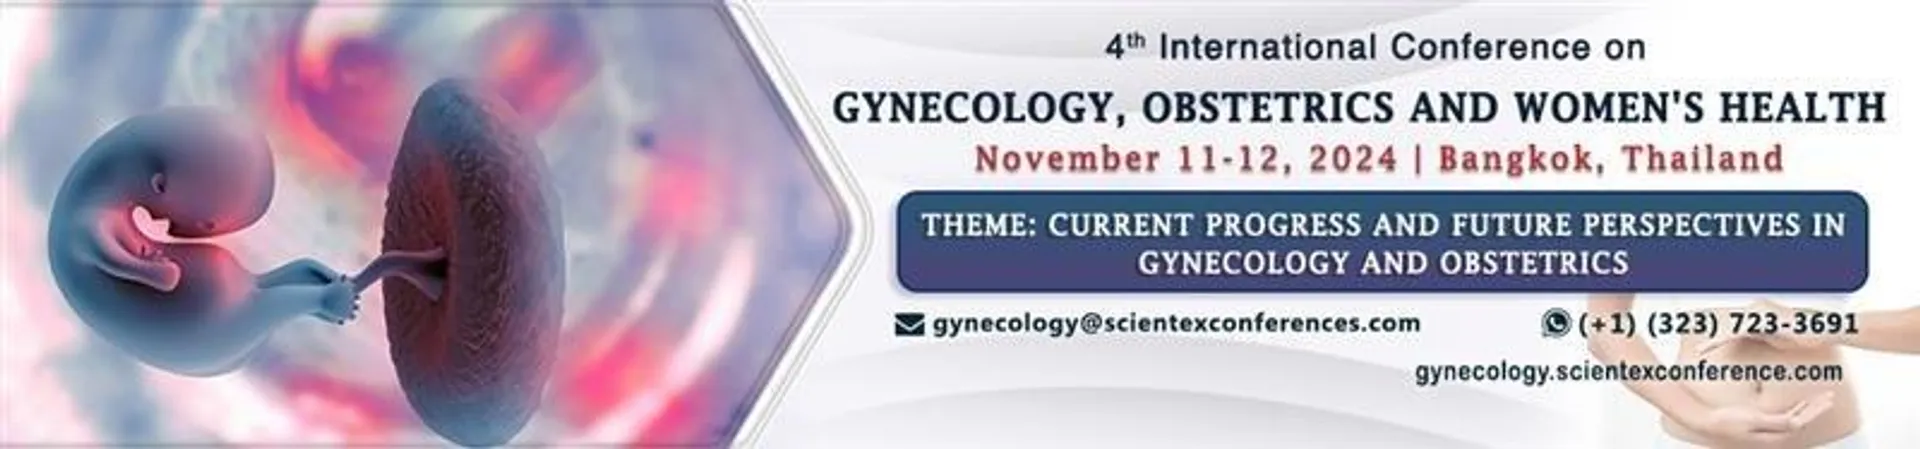 Gynecology 2024_Banner-c272pr.png